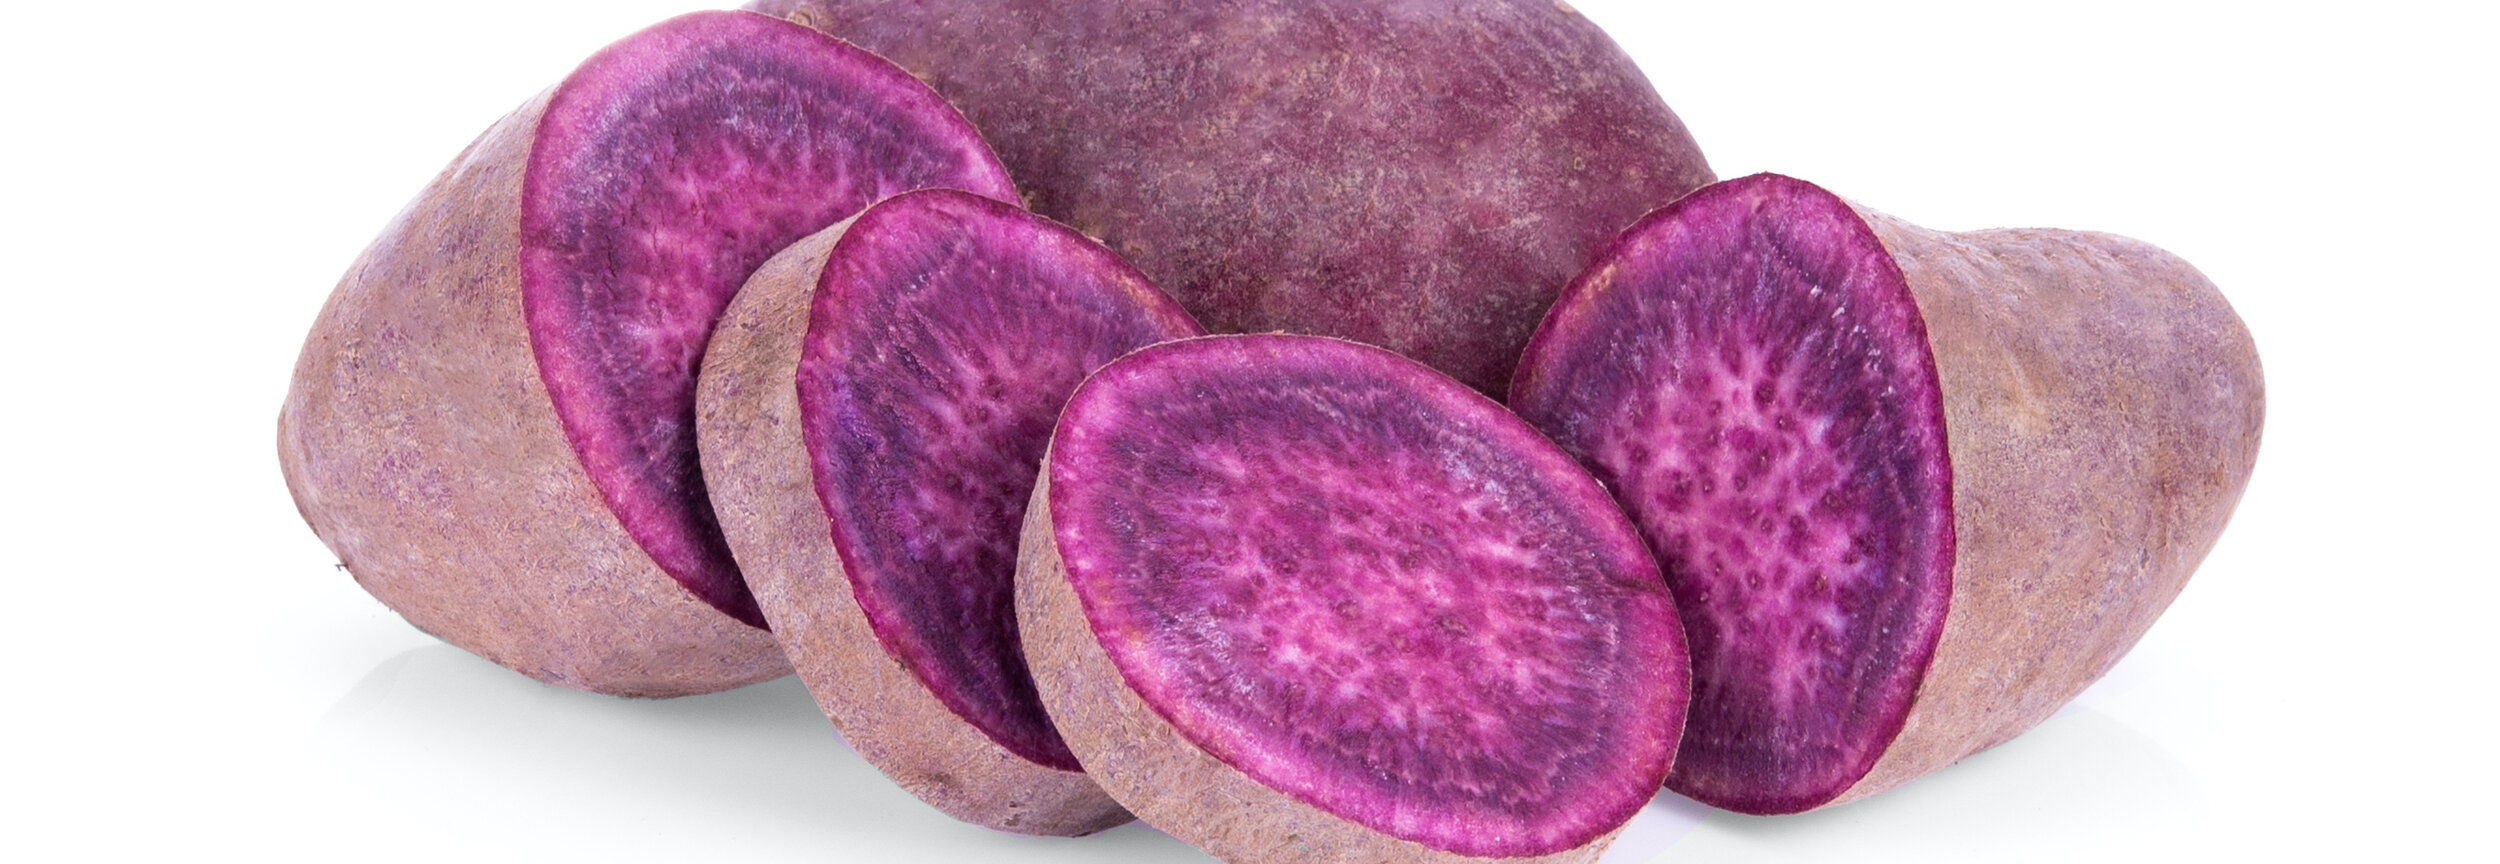 bigstock-Raw-Purple-Sweet-Potato-Or-Yam-346113760 (1).jpg